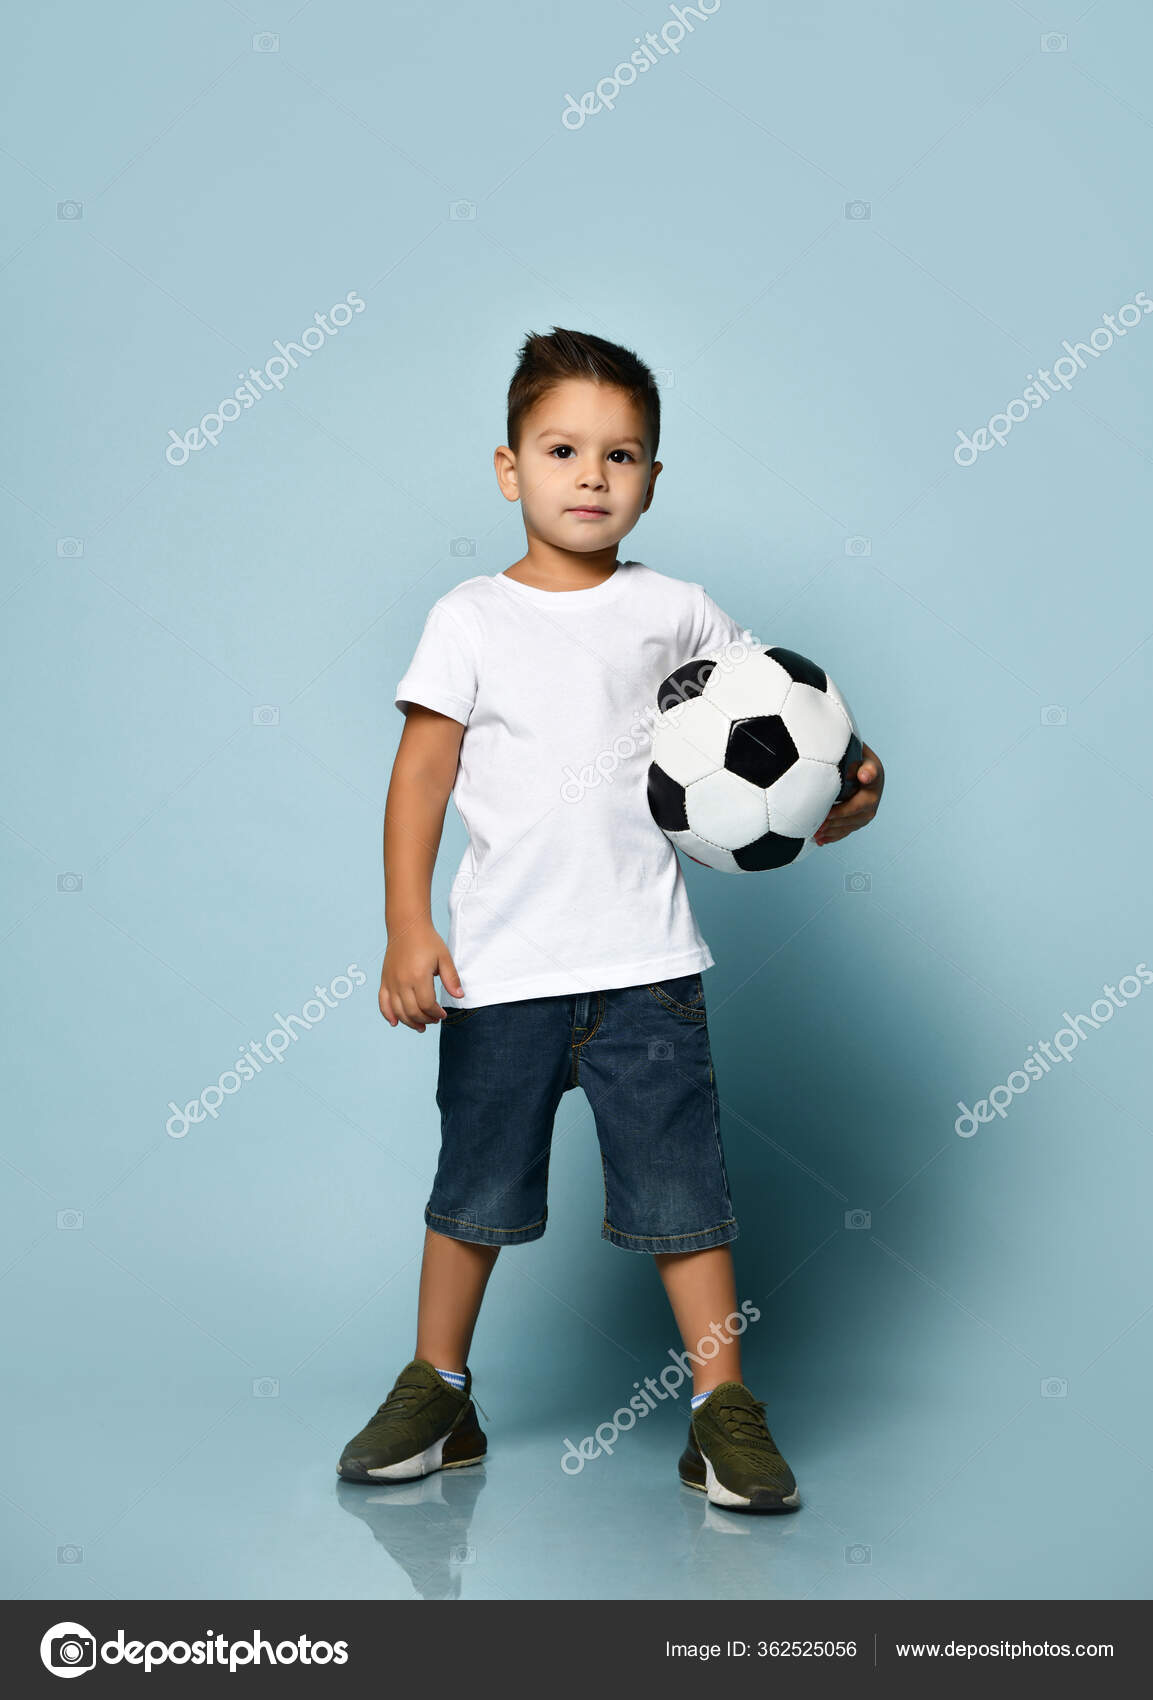 Menino jogando futebol. menino segurando bola